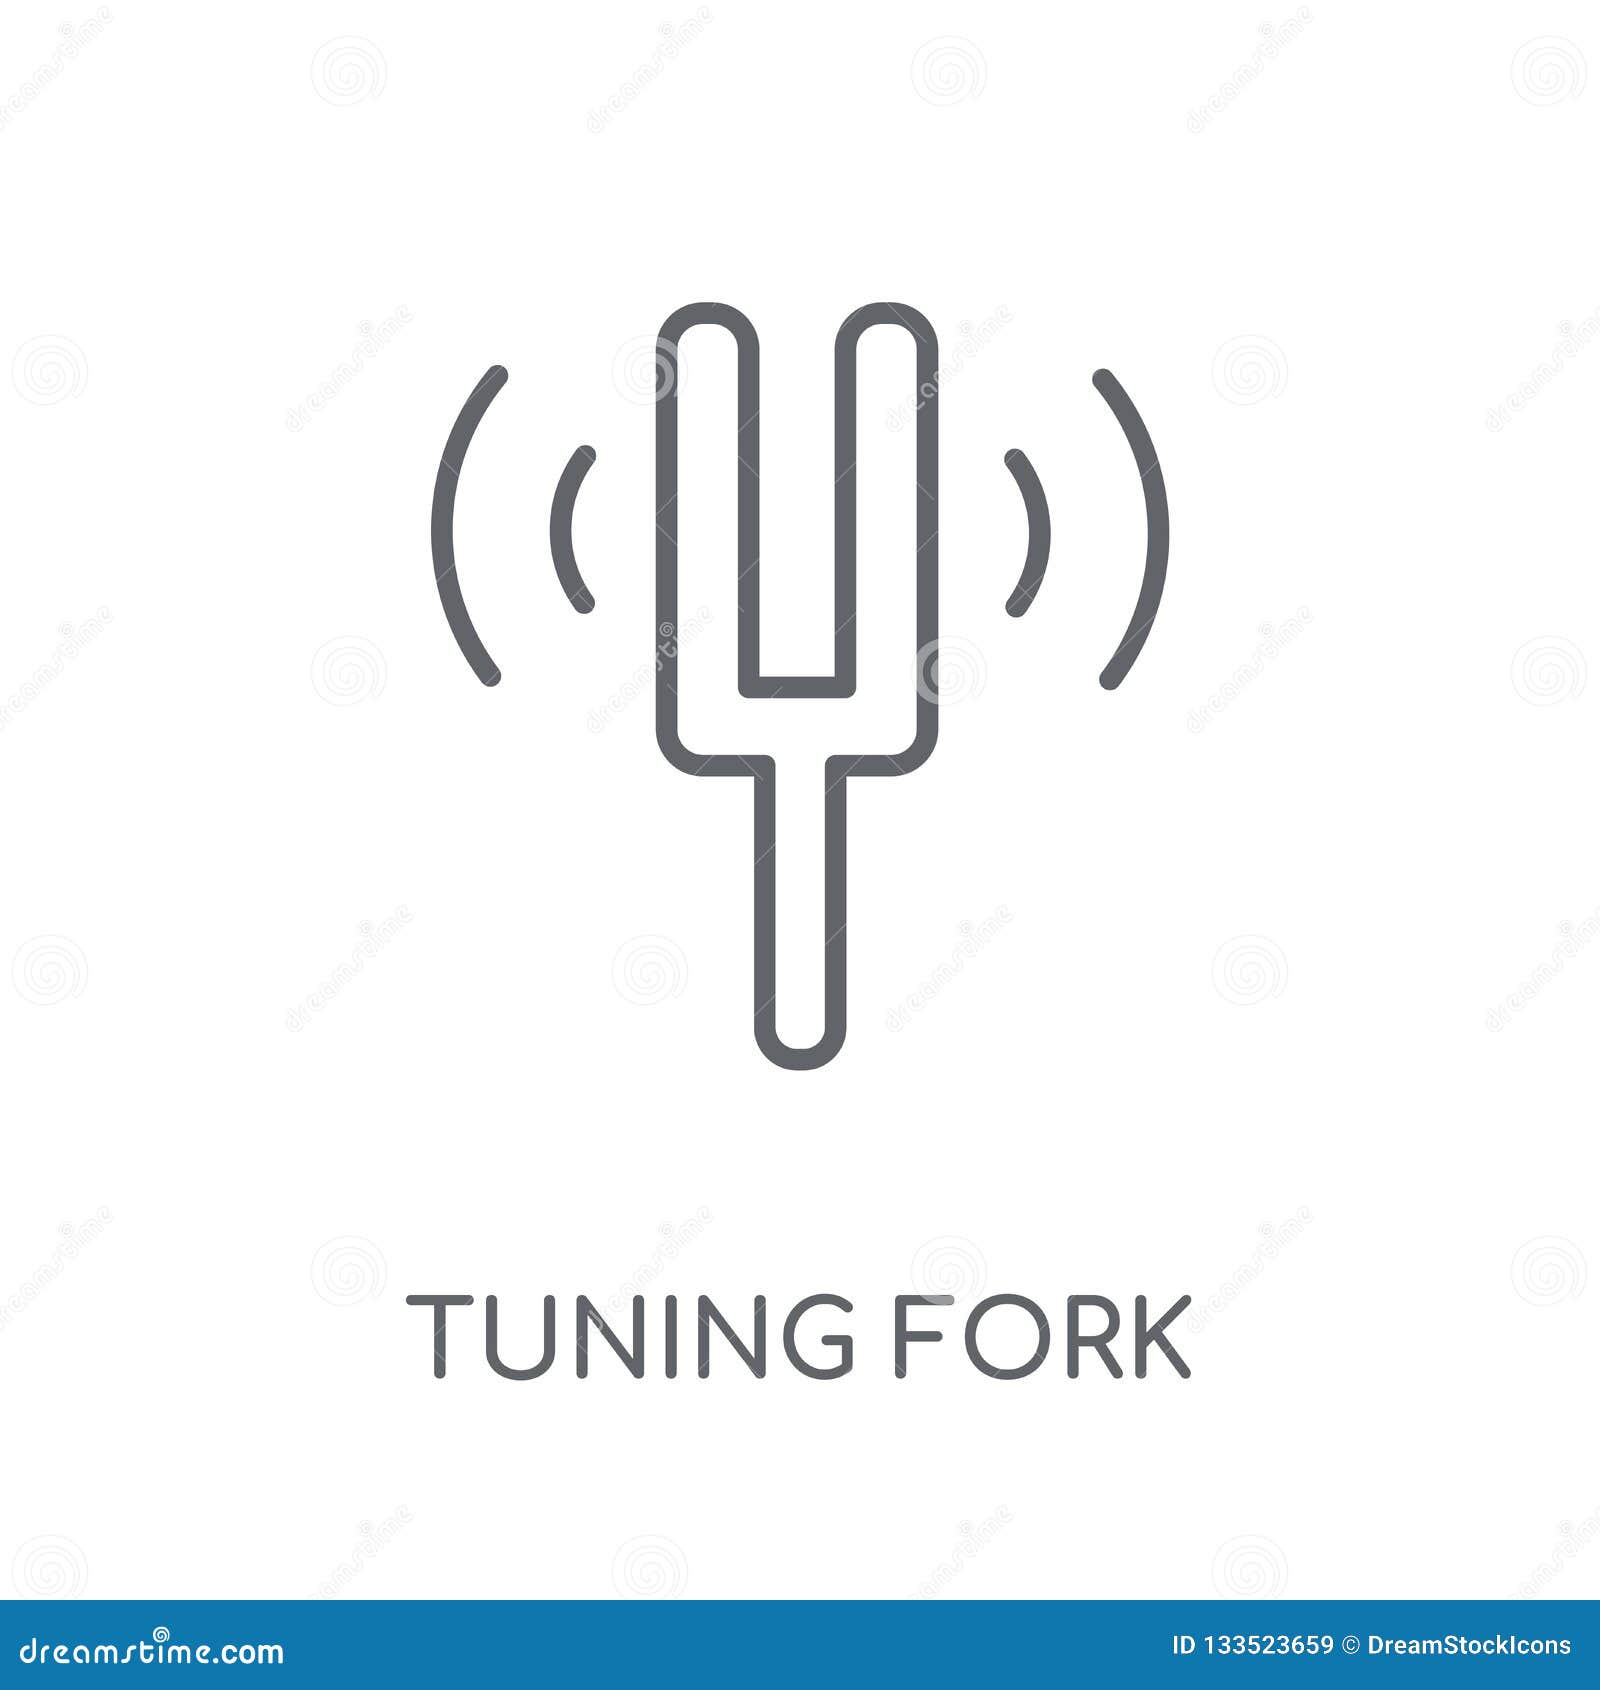 Tune fork